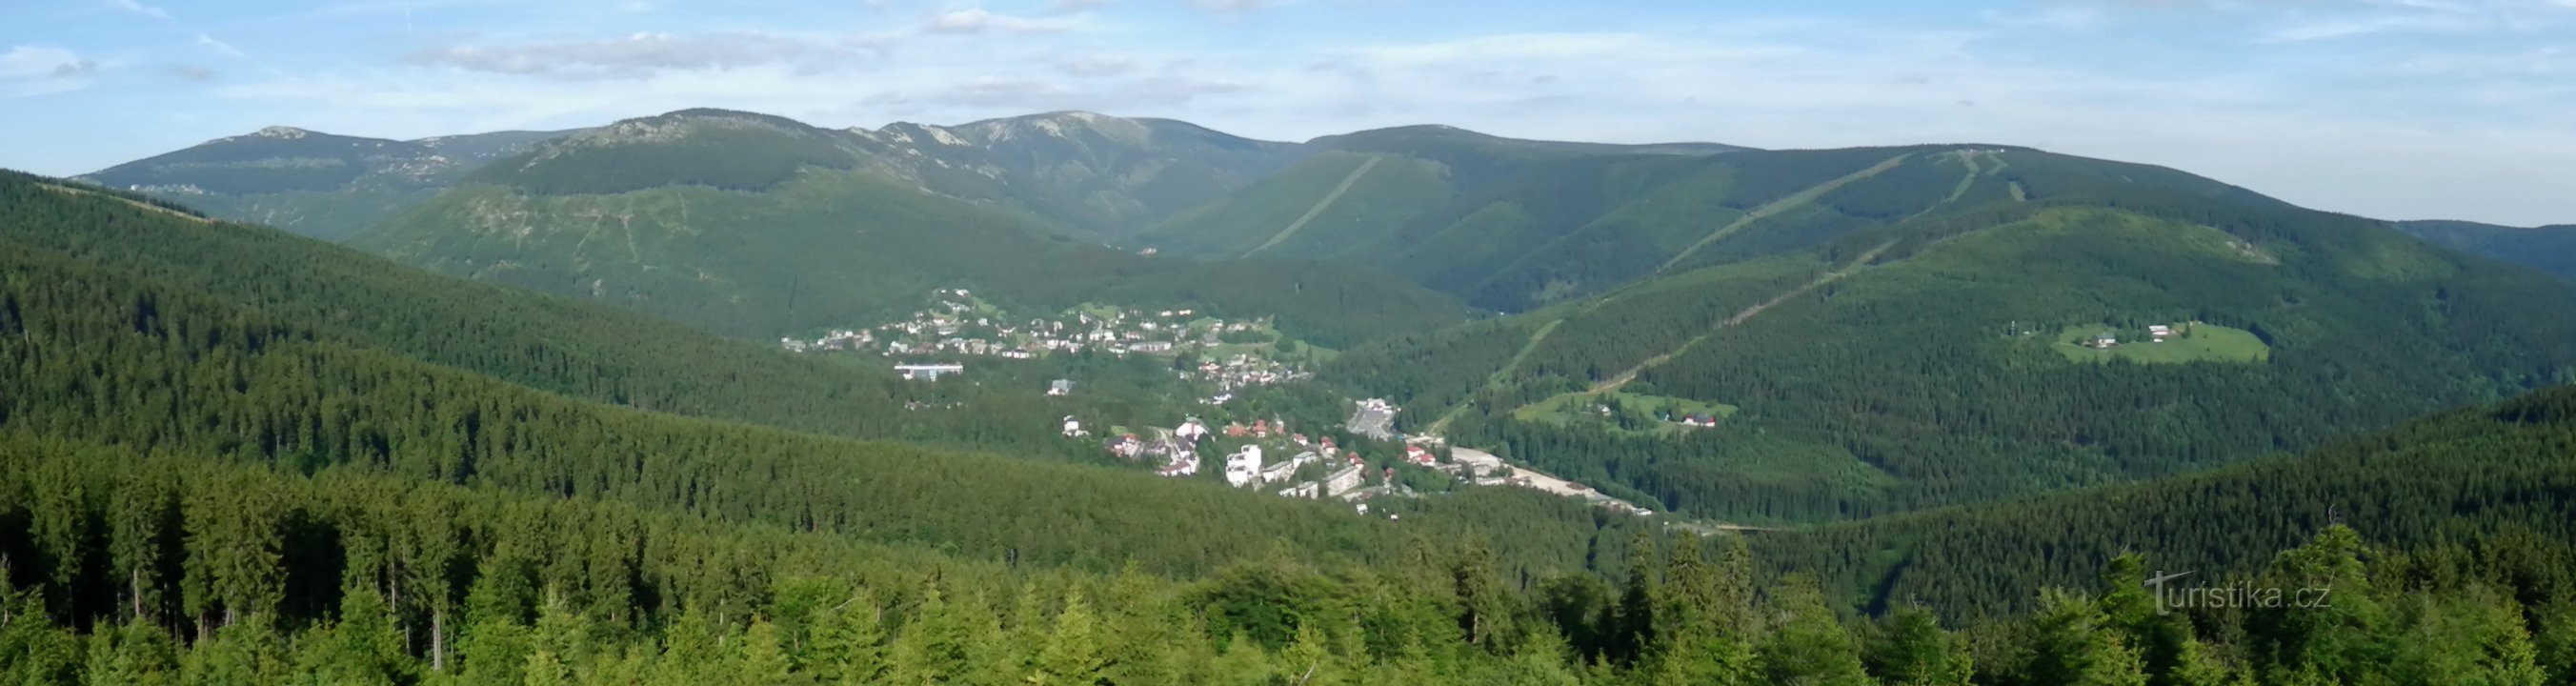 Vista panorâmica da rocha de Harrach (de Malé Špičák a Hromovka), abaixo